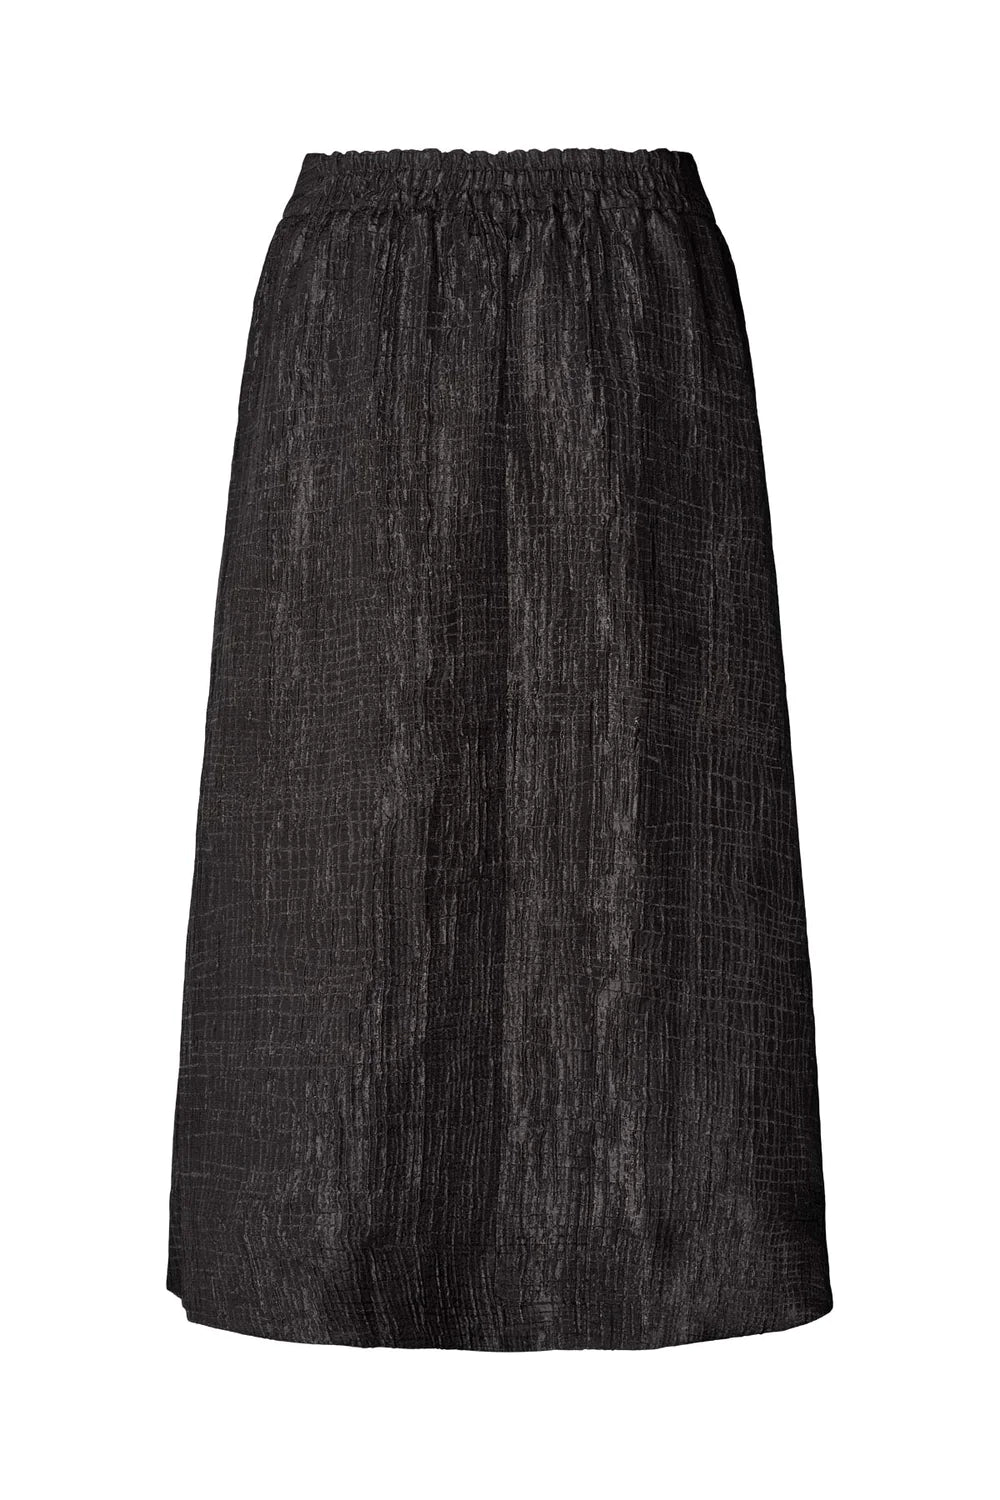 Tut- Trellis Jacquard Skirt